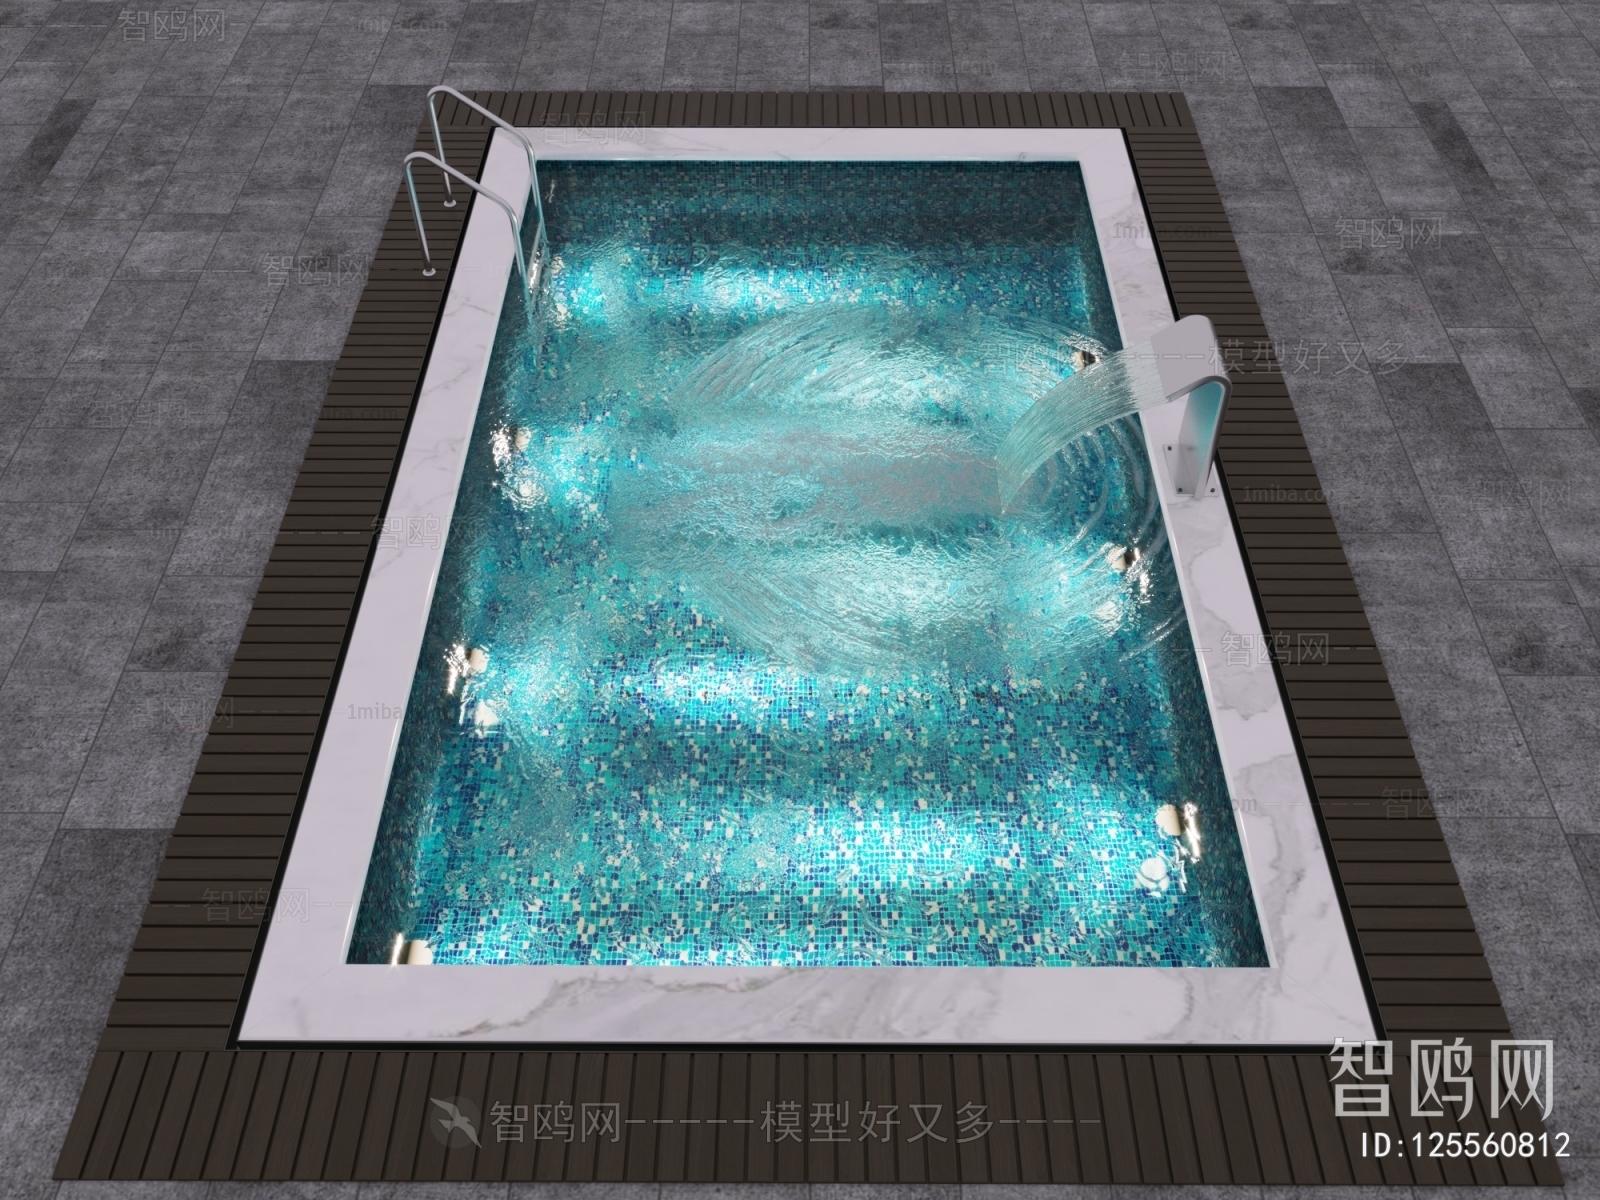 Modern Swimming Pool